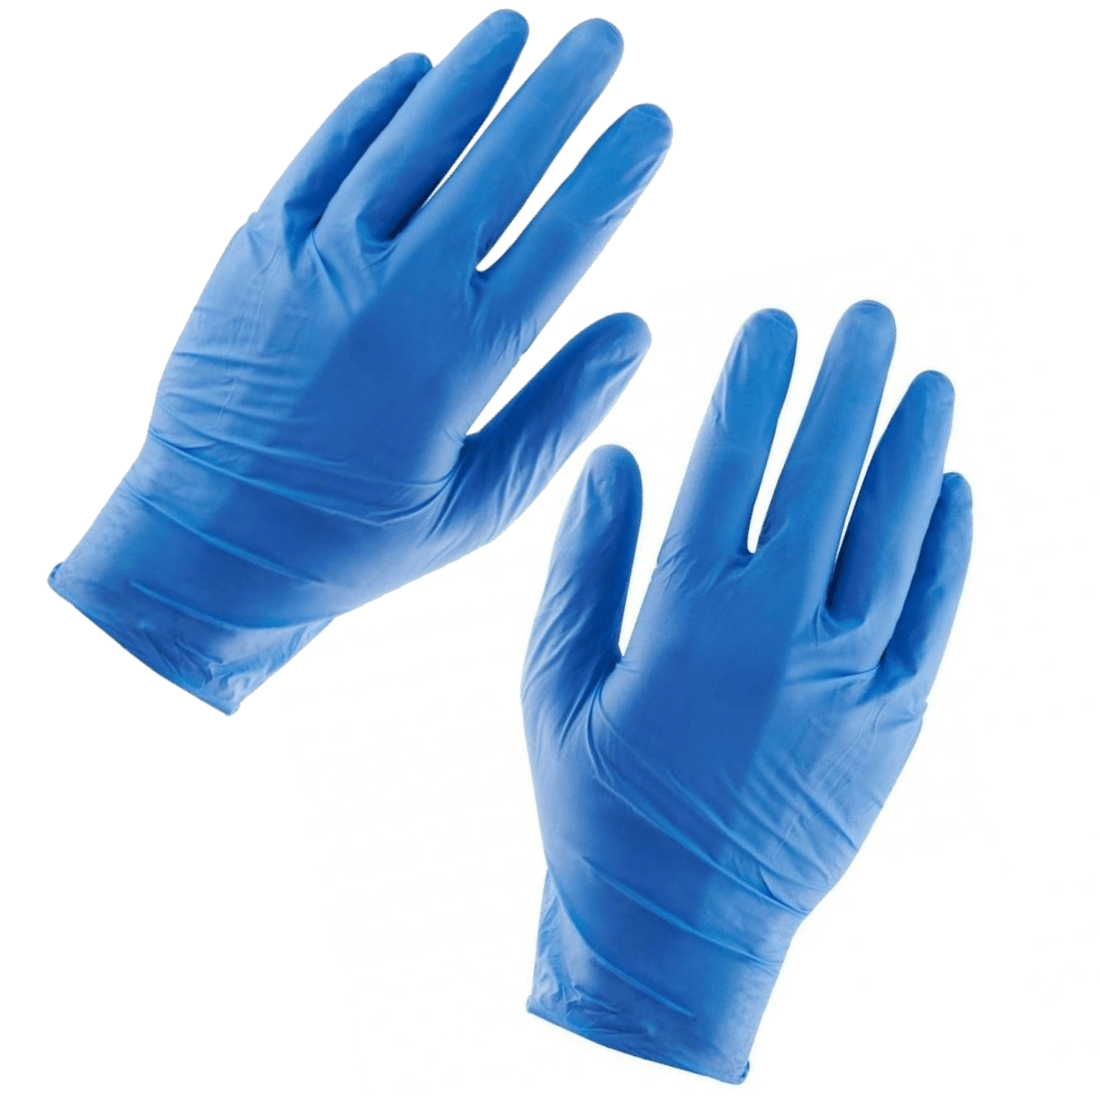 Examination gloves, disposable, medical grade, one size, latex free, powder free